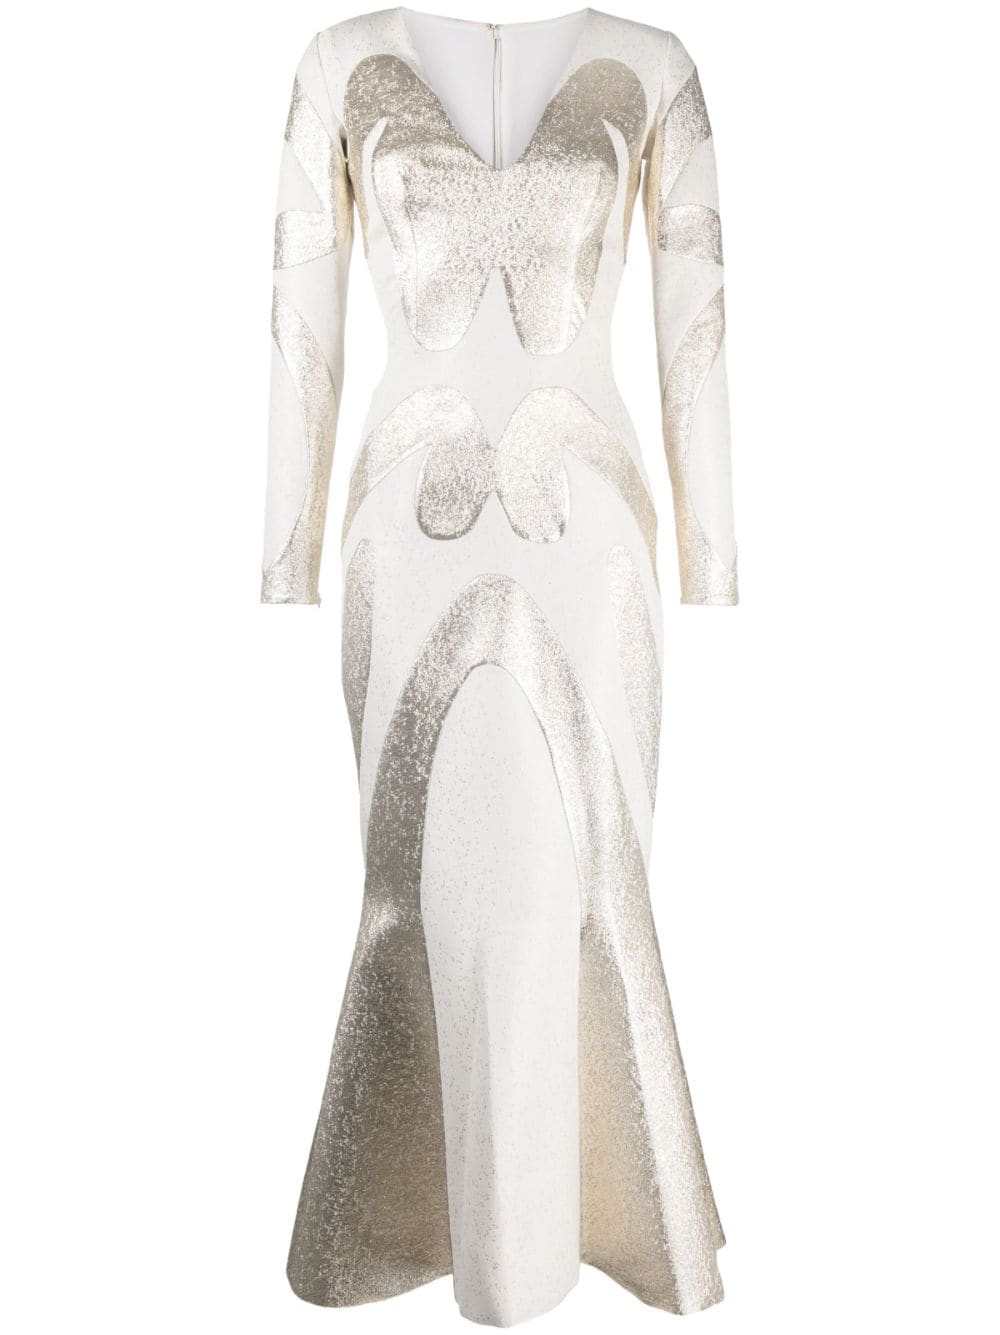 Saiid Kobeisy brocade-effect long-sleeve dress - White